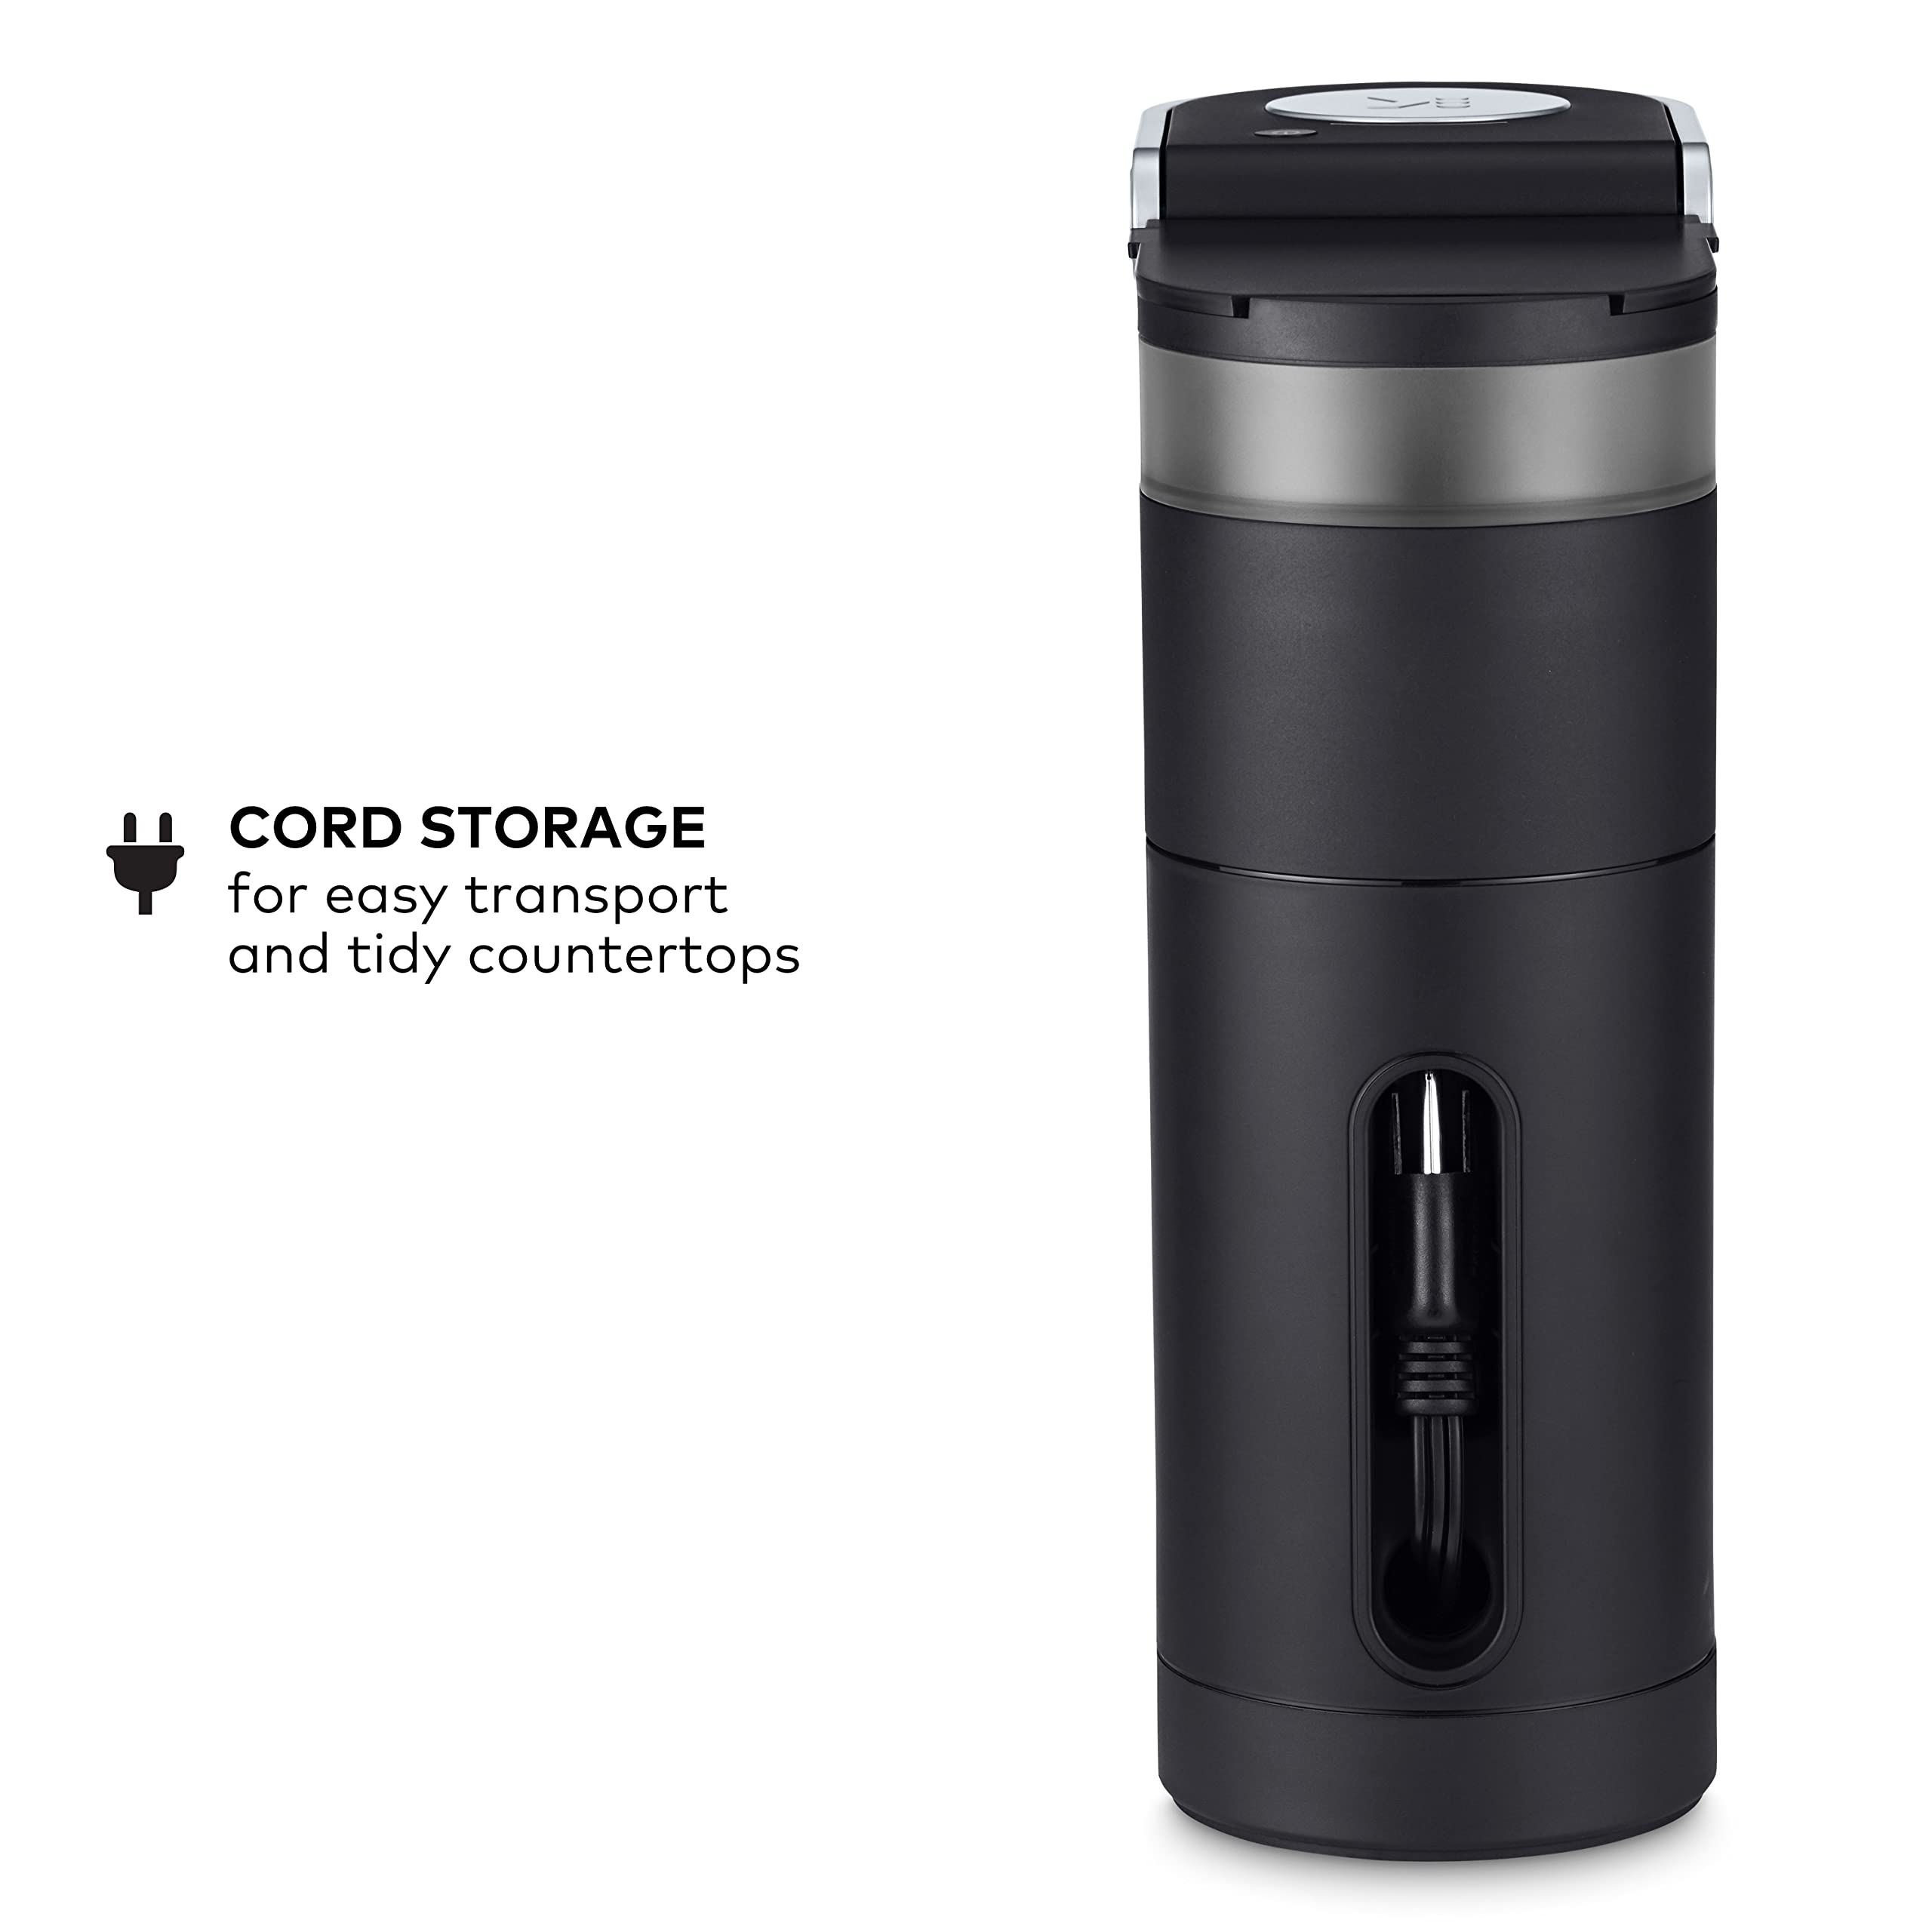 Matte Black Hot Beverage K-Mini Dispenser  - Acceptable